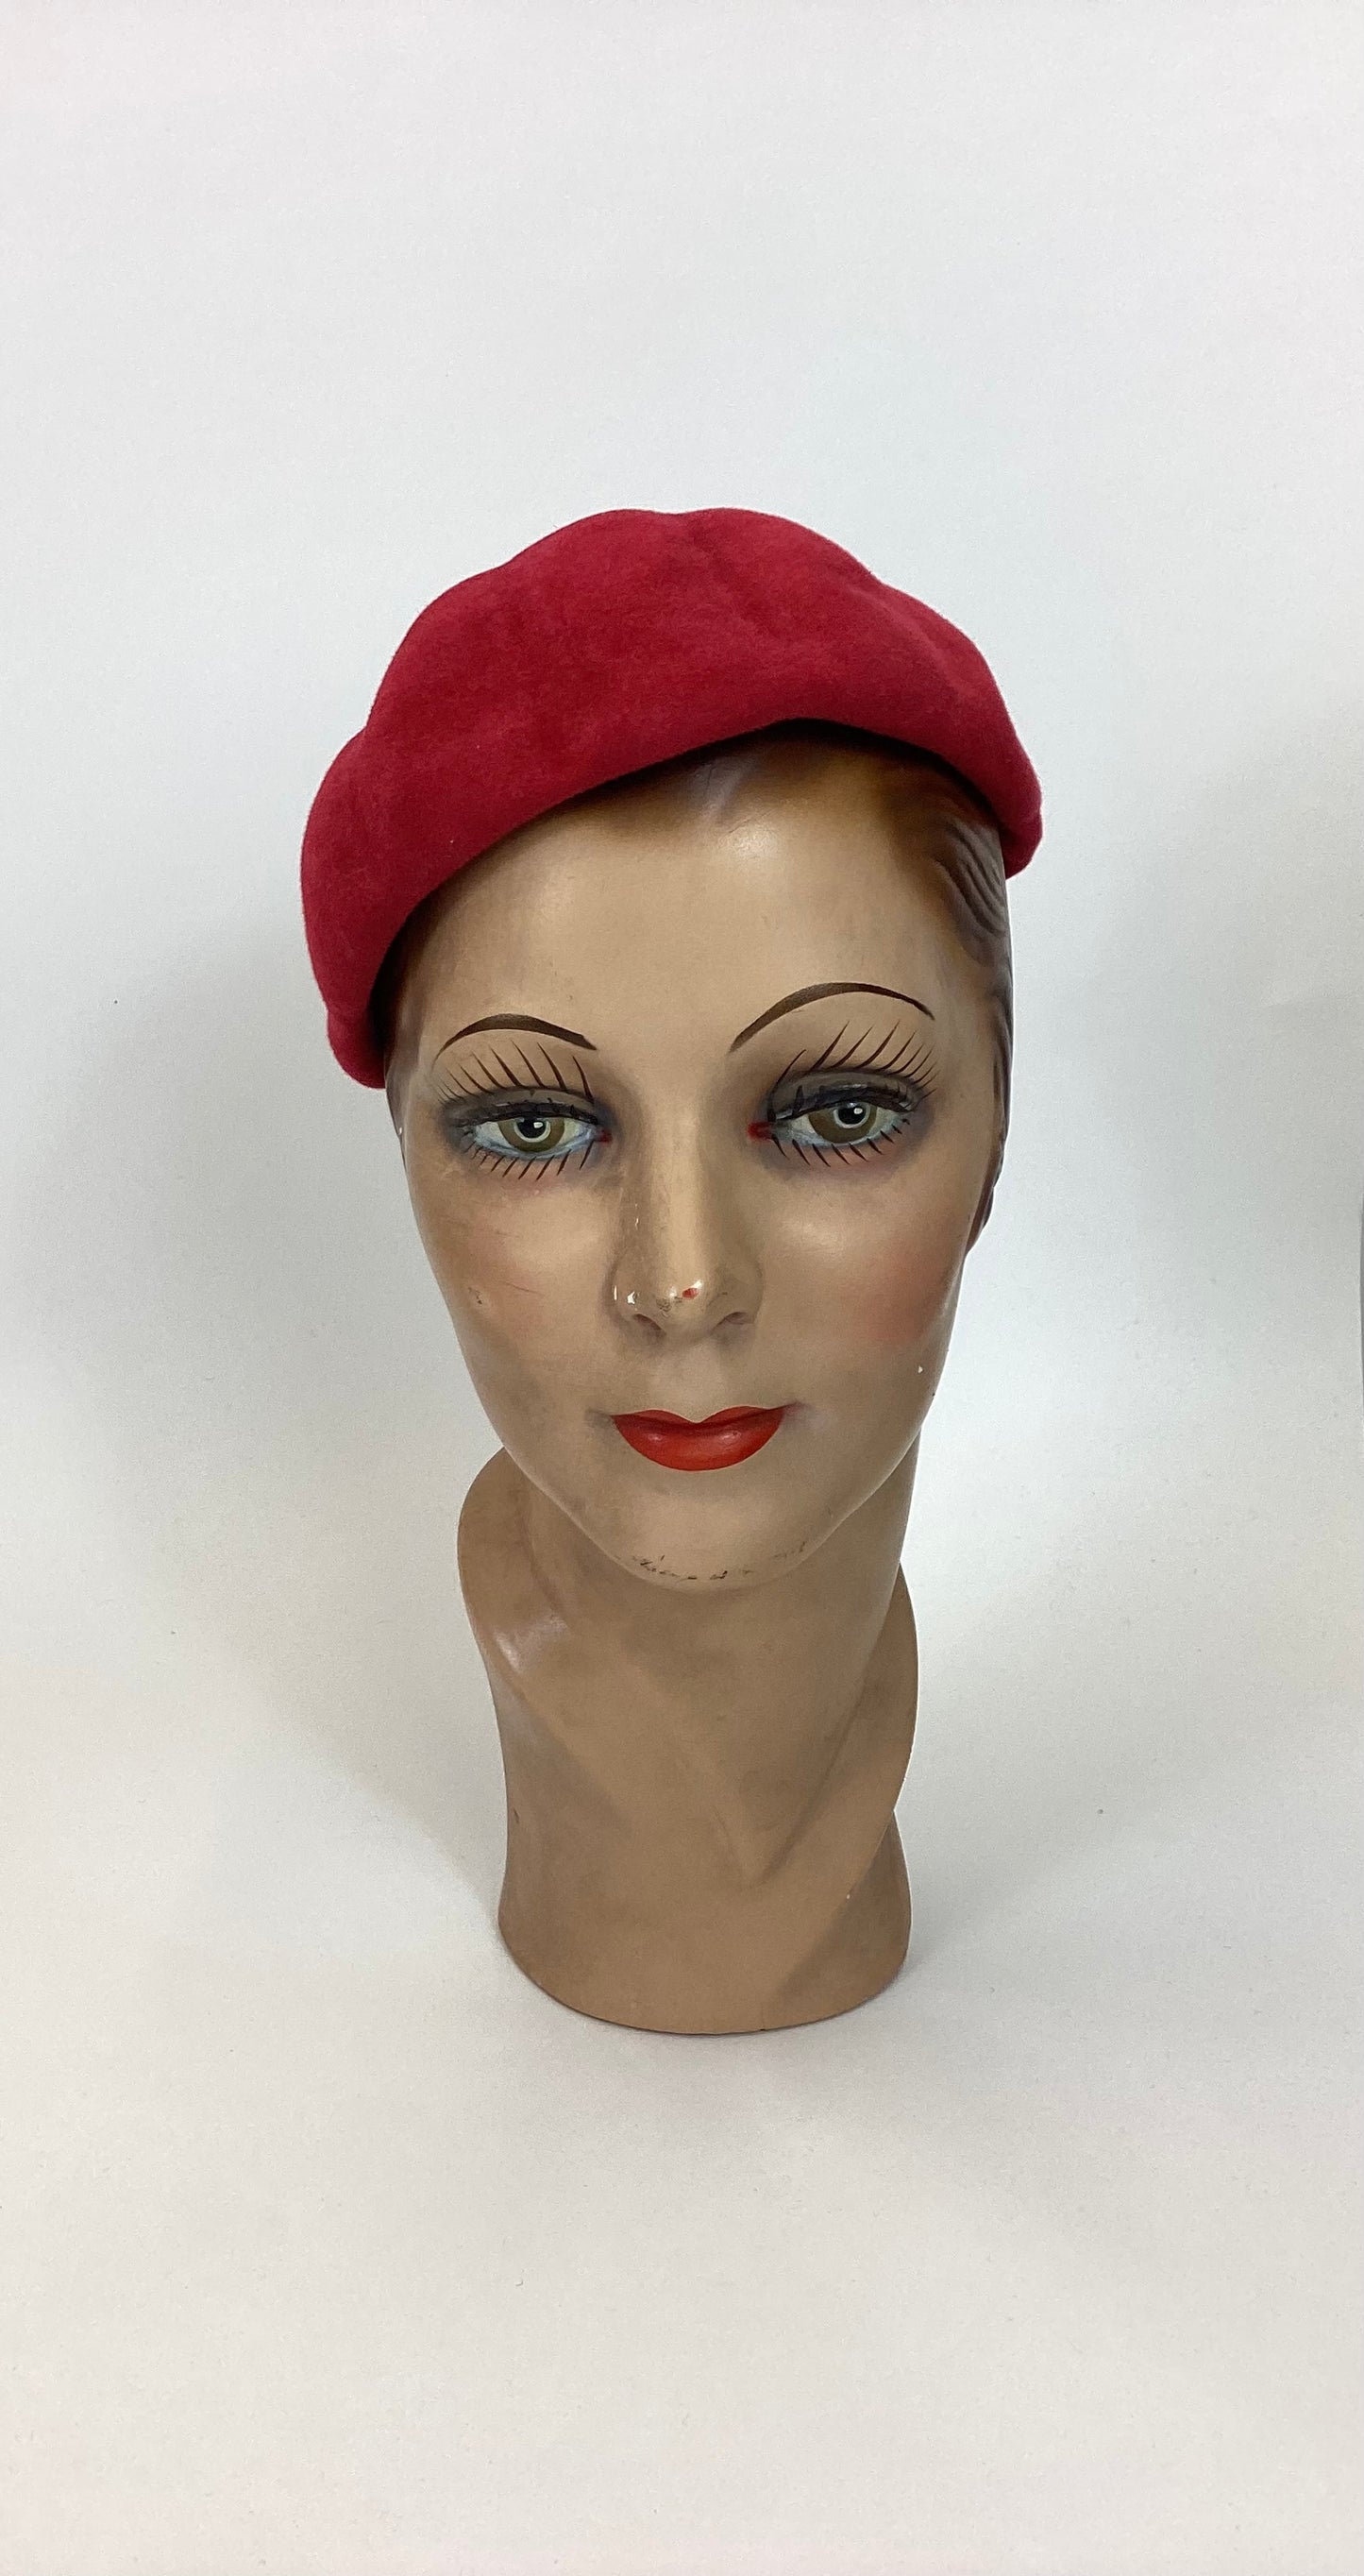 Original 50’s Fabulous shape hat - in Red